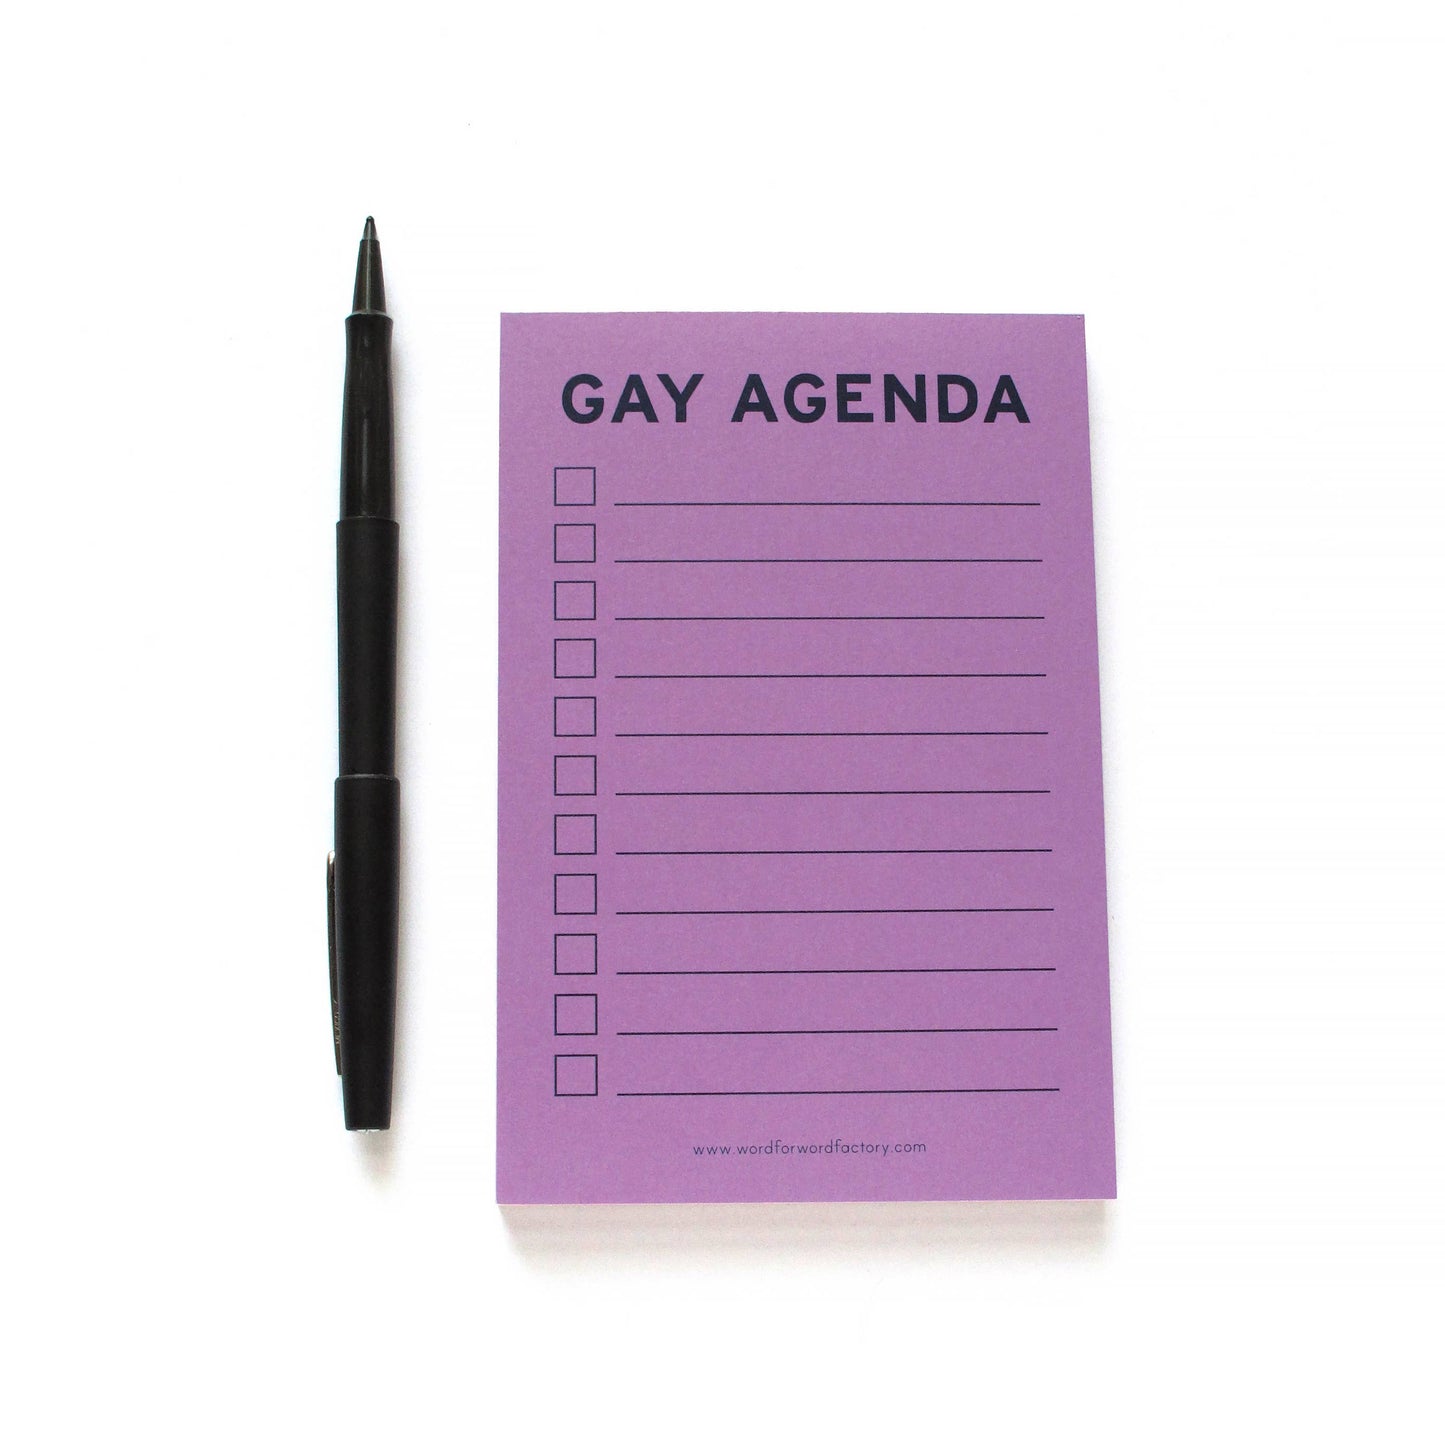 WORD FOR WORD Factory - GAY AGENDA Notepad Checklist